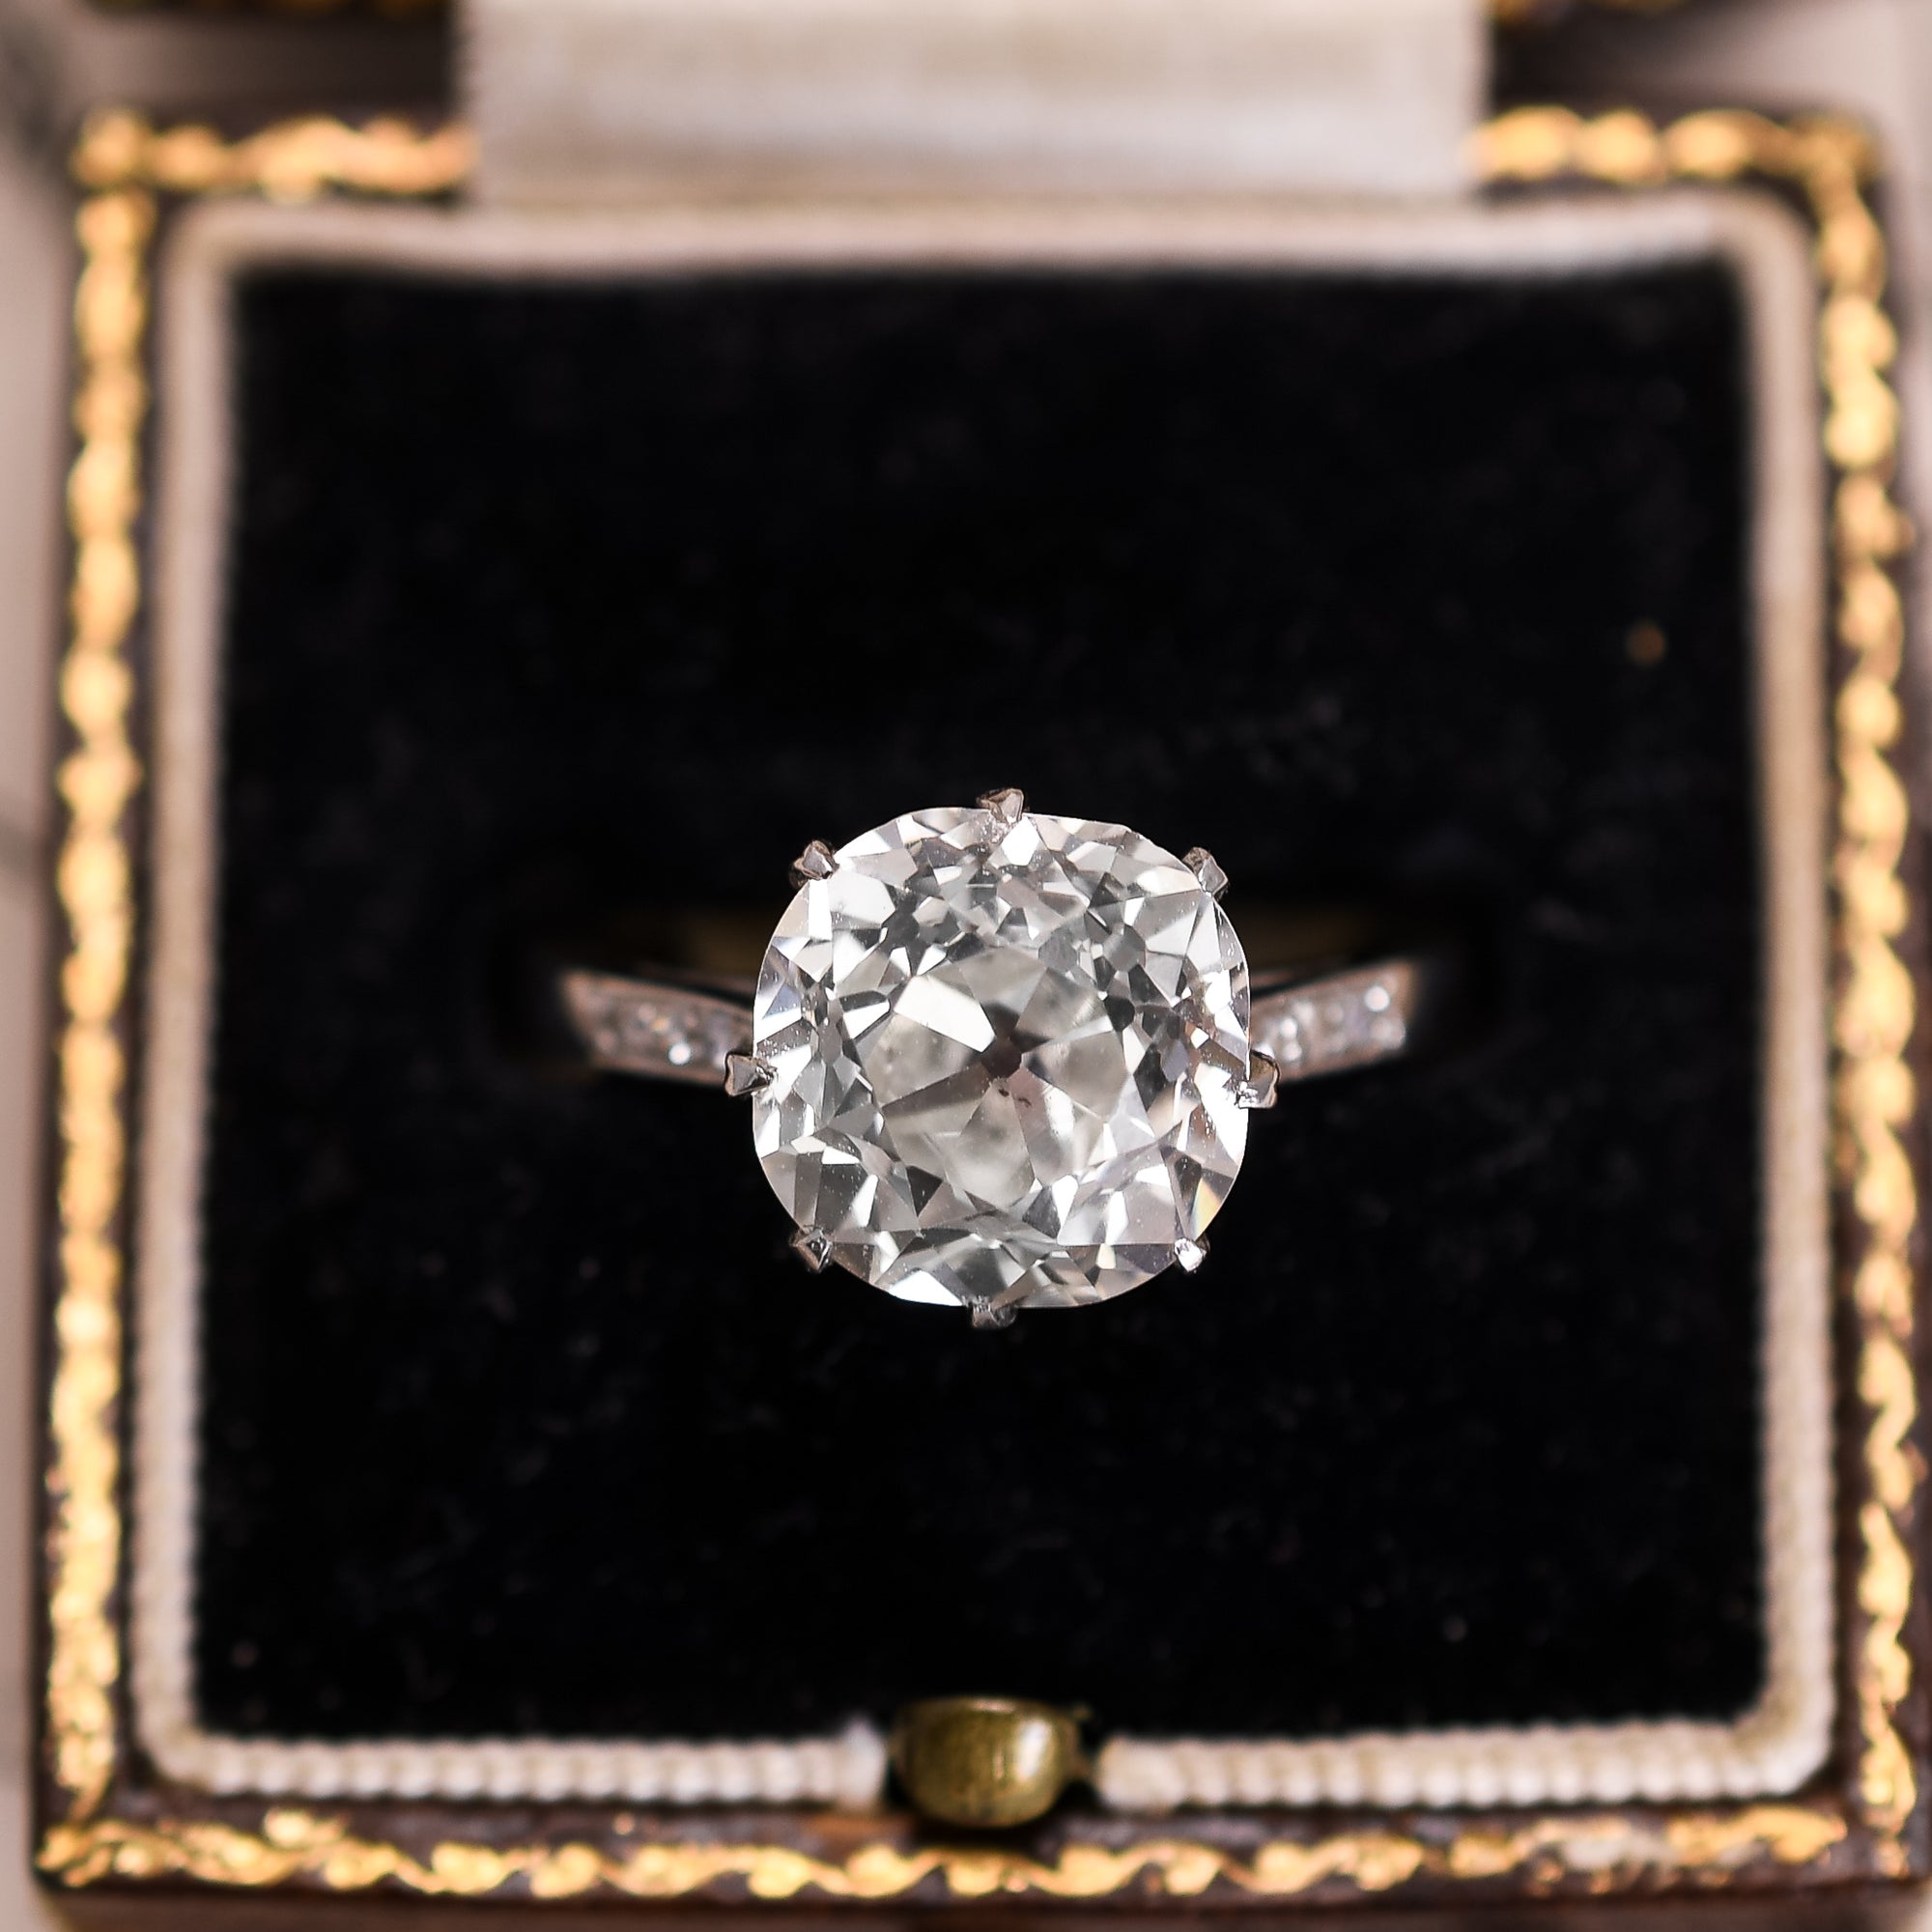 Antique 1.18ct Old European Cut Diamond Engagement Ring | eBay